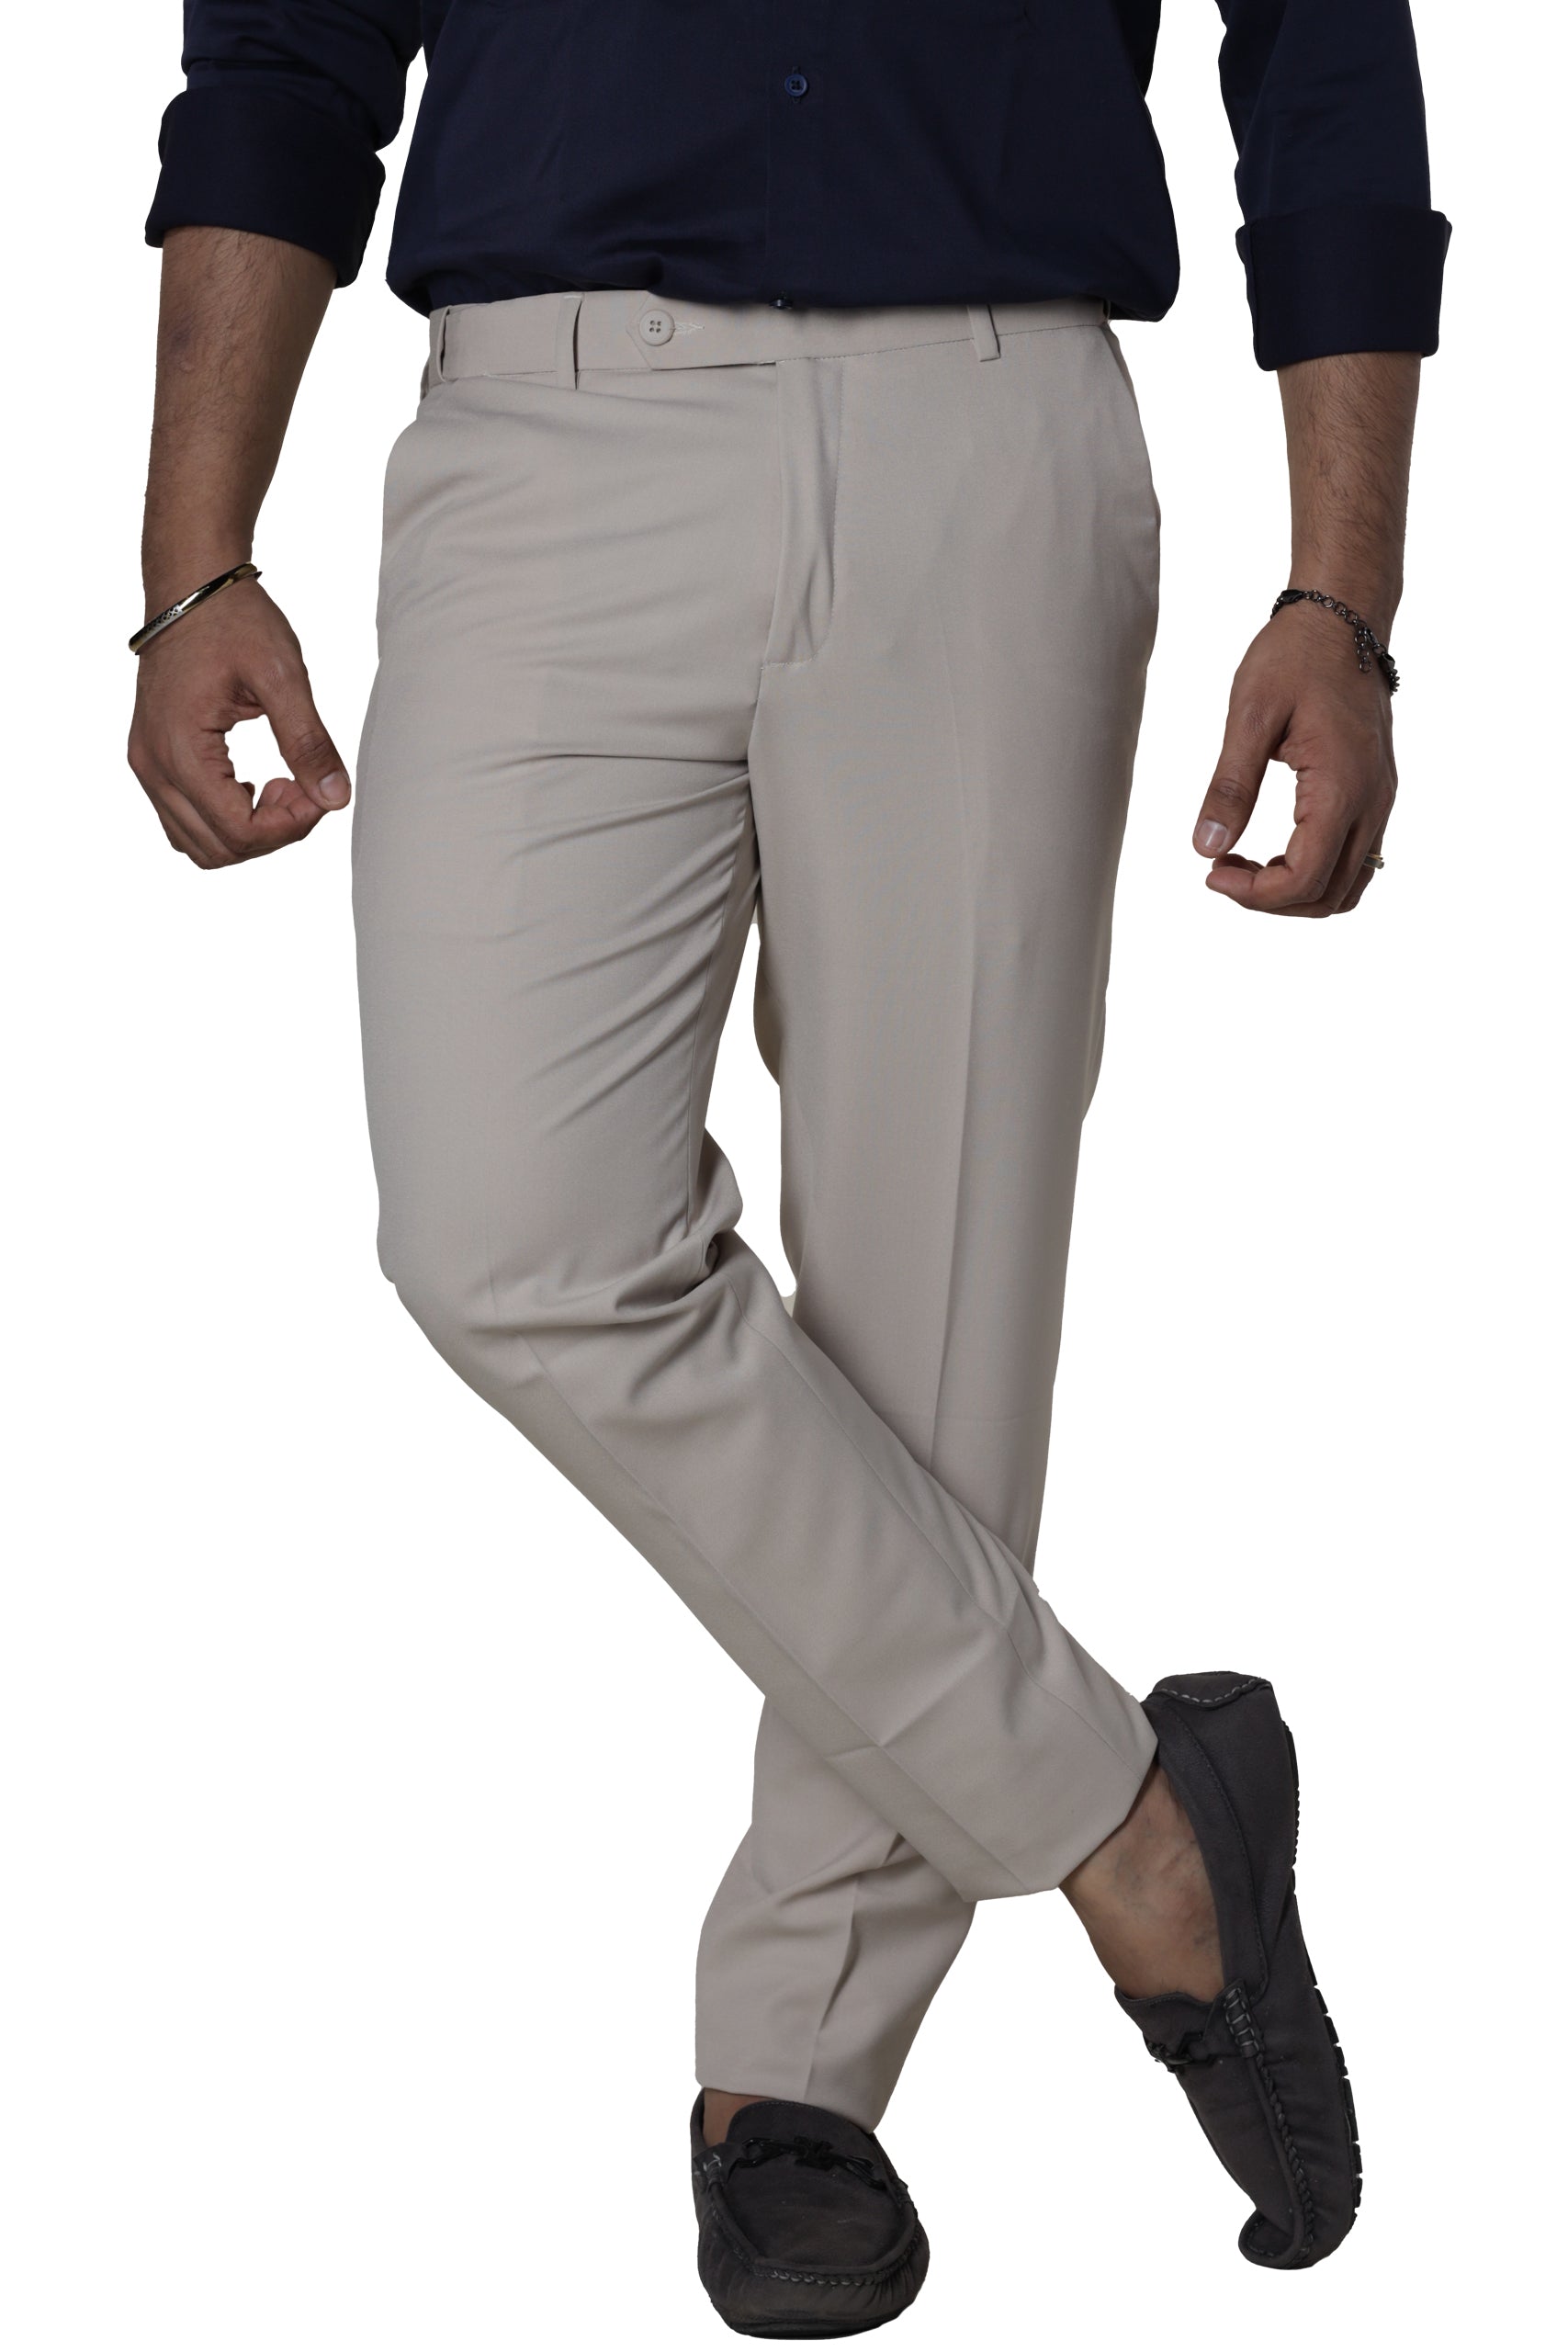 FRANKO ROGER FLEXI WAIST Slim Fit Men Brown Trousers  Buy FRANKO ROGER  FLEXI WAIST Slim Fit Men Brown Trousers Online at Best Prices in India   Flipkartcom